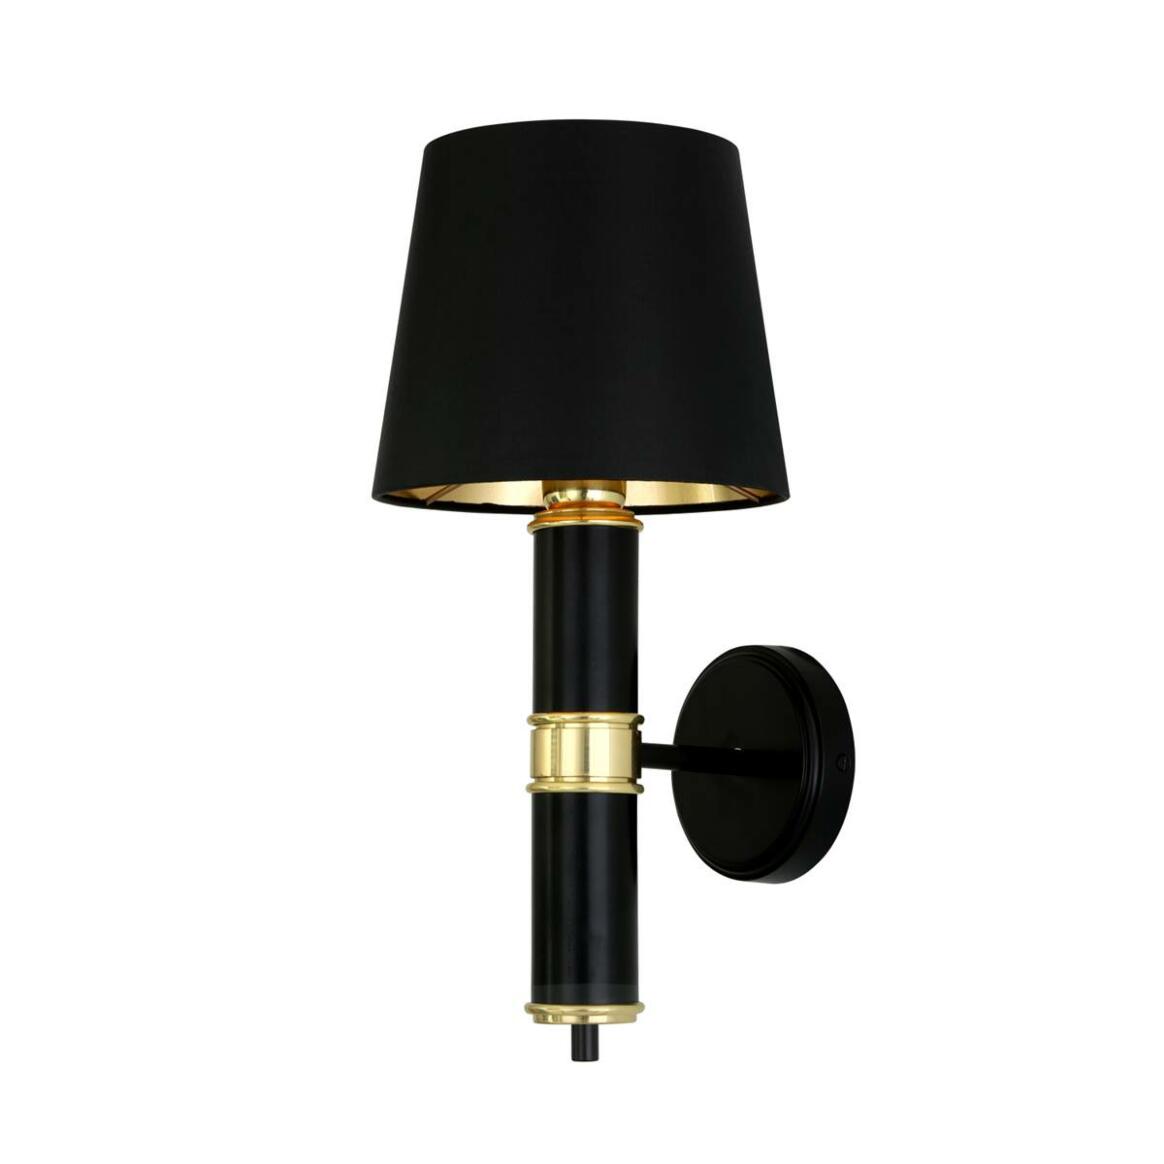 Kangos Polished Brass and Black Pillar Wall Light with Fabric Shade main product image